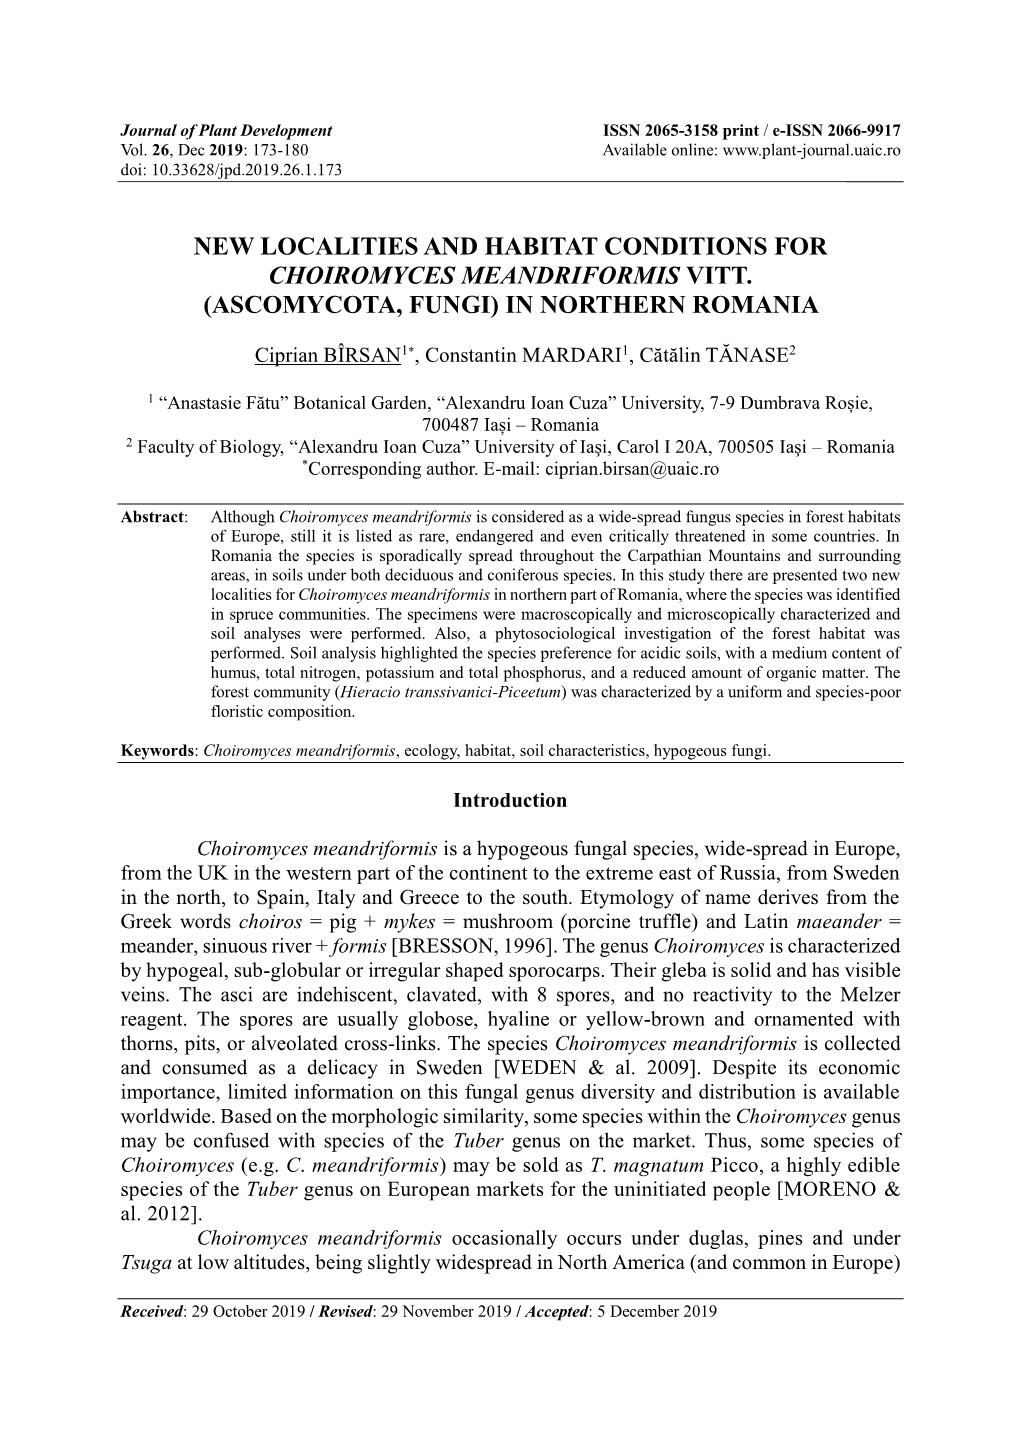 New Localities and Habitat Conditions for Choiromyces Meandriformis Vitt